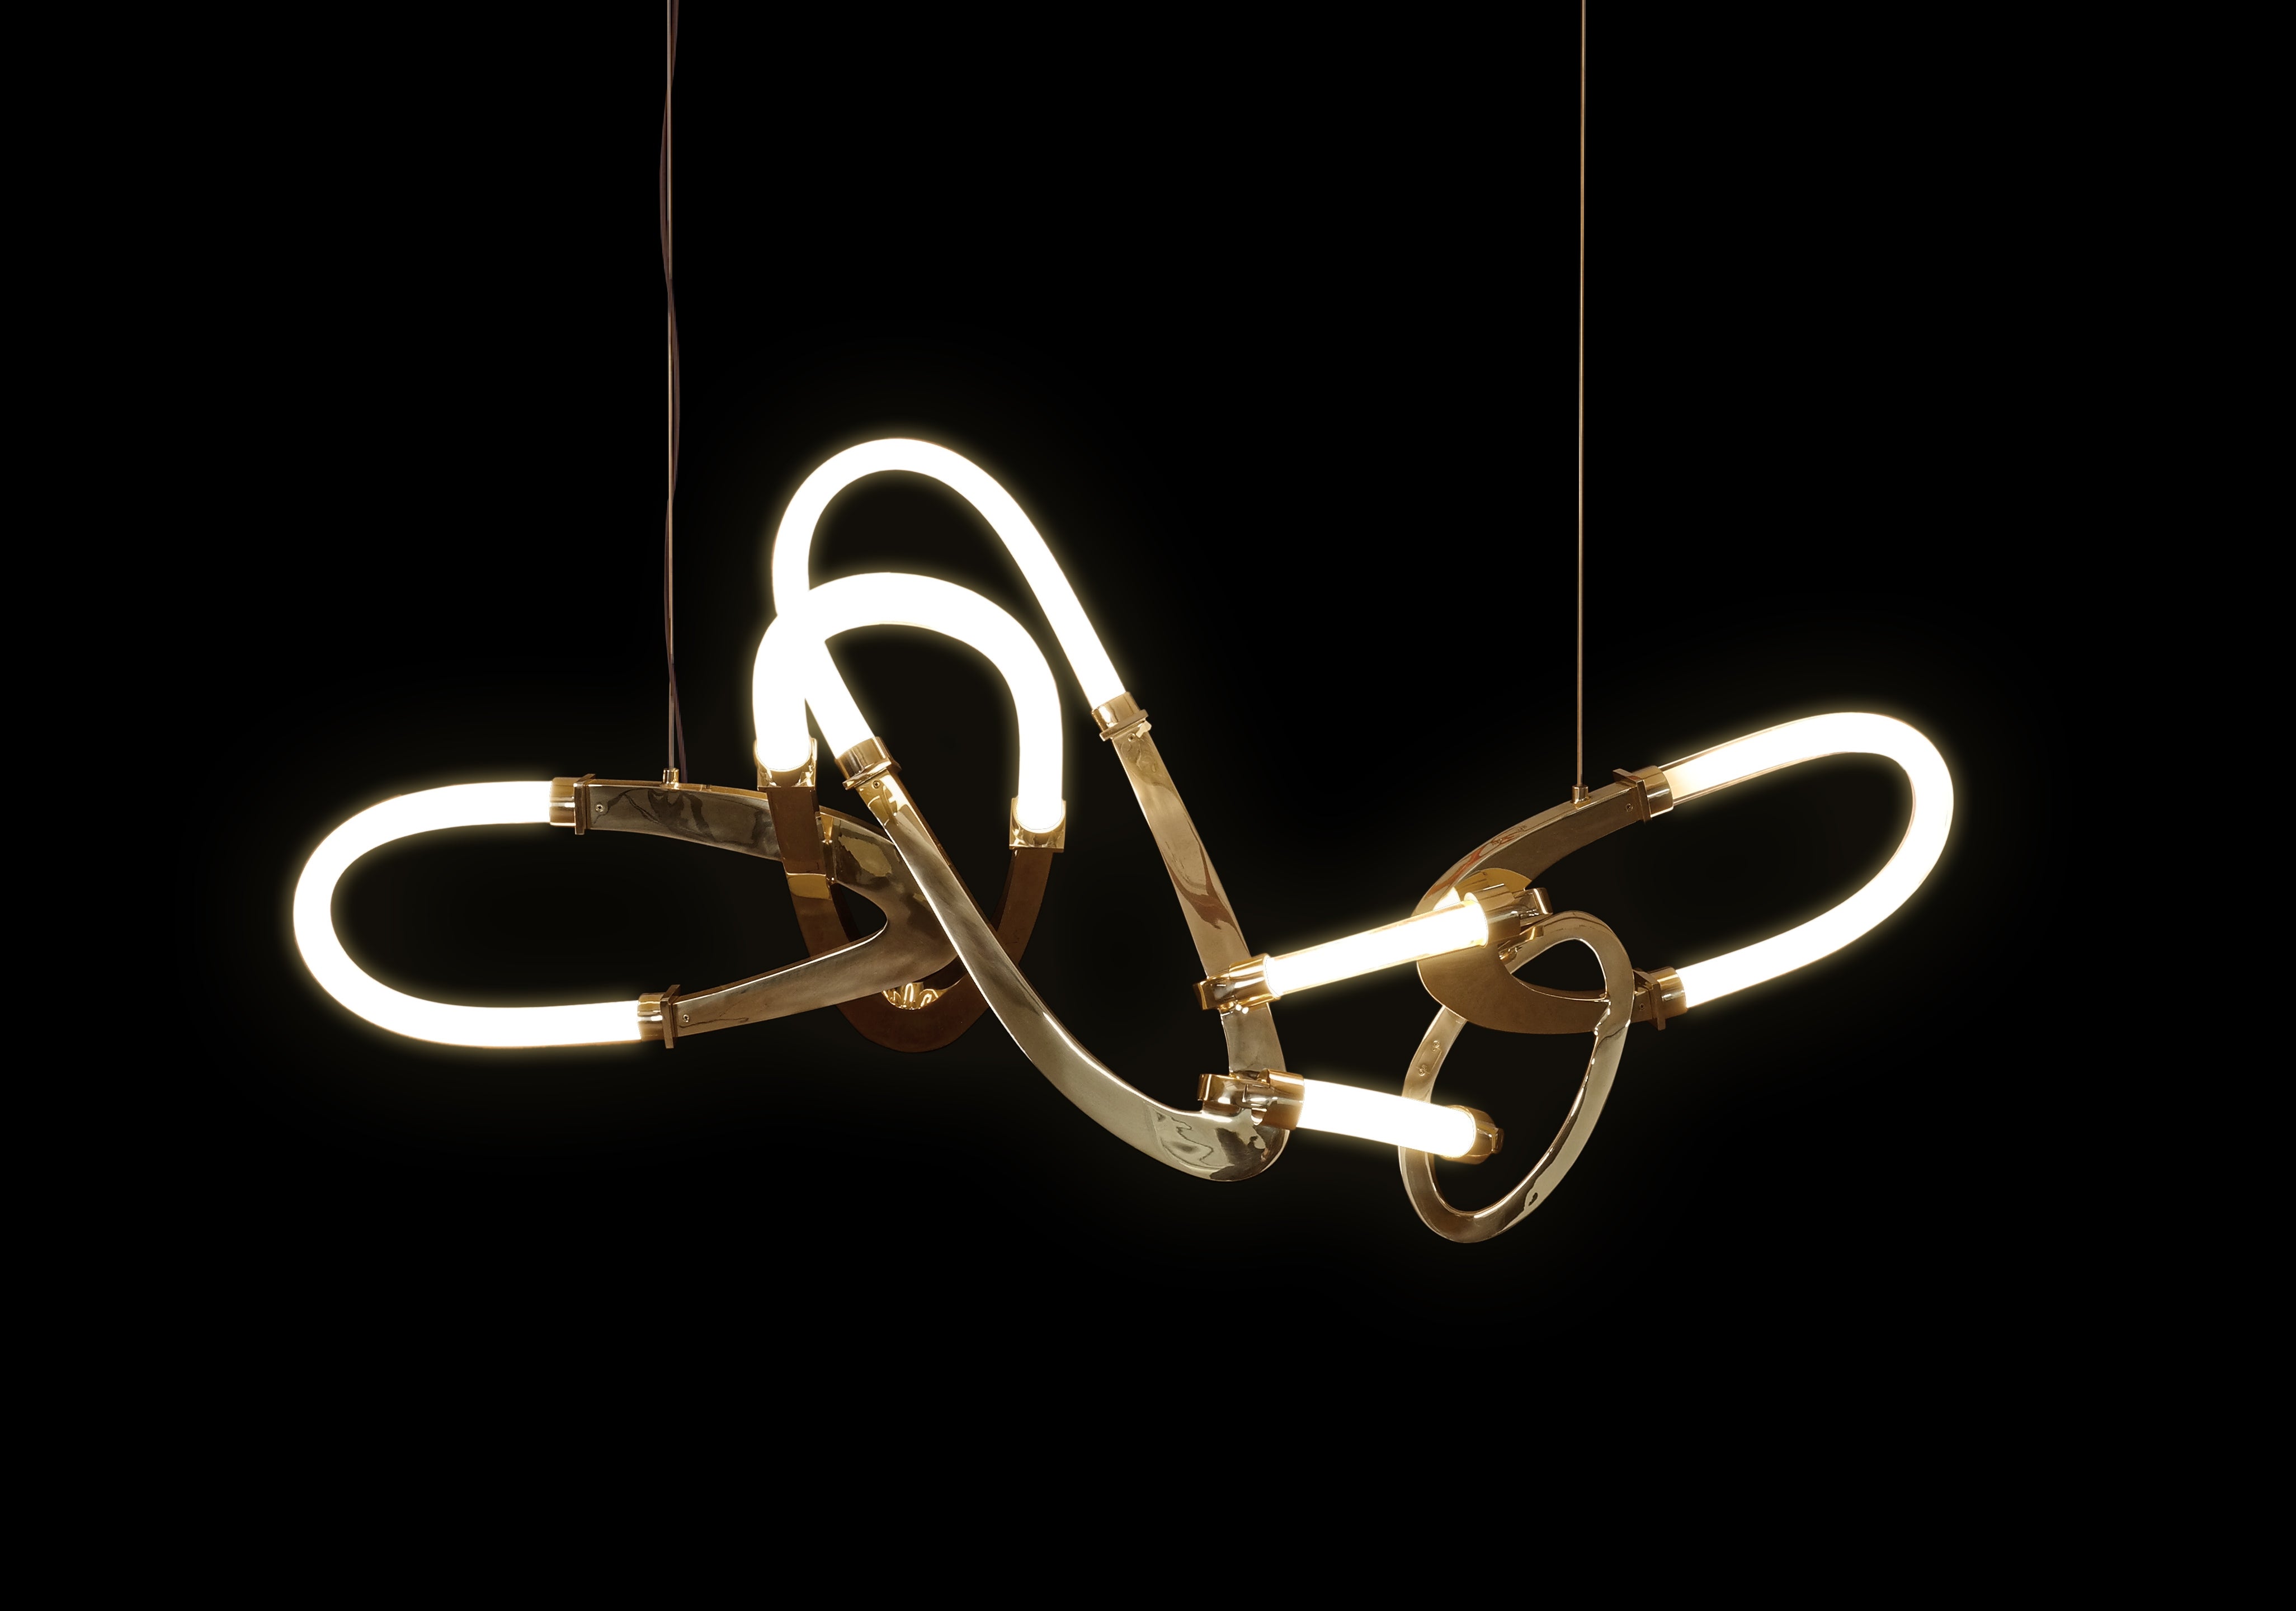 Bouchon Chandelier: Interlocked Circular Sculptural Elements of Bronze and Glass For Sale